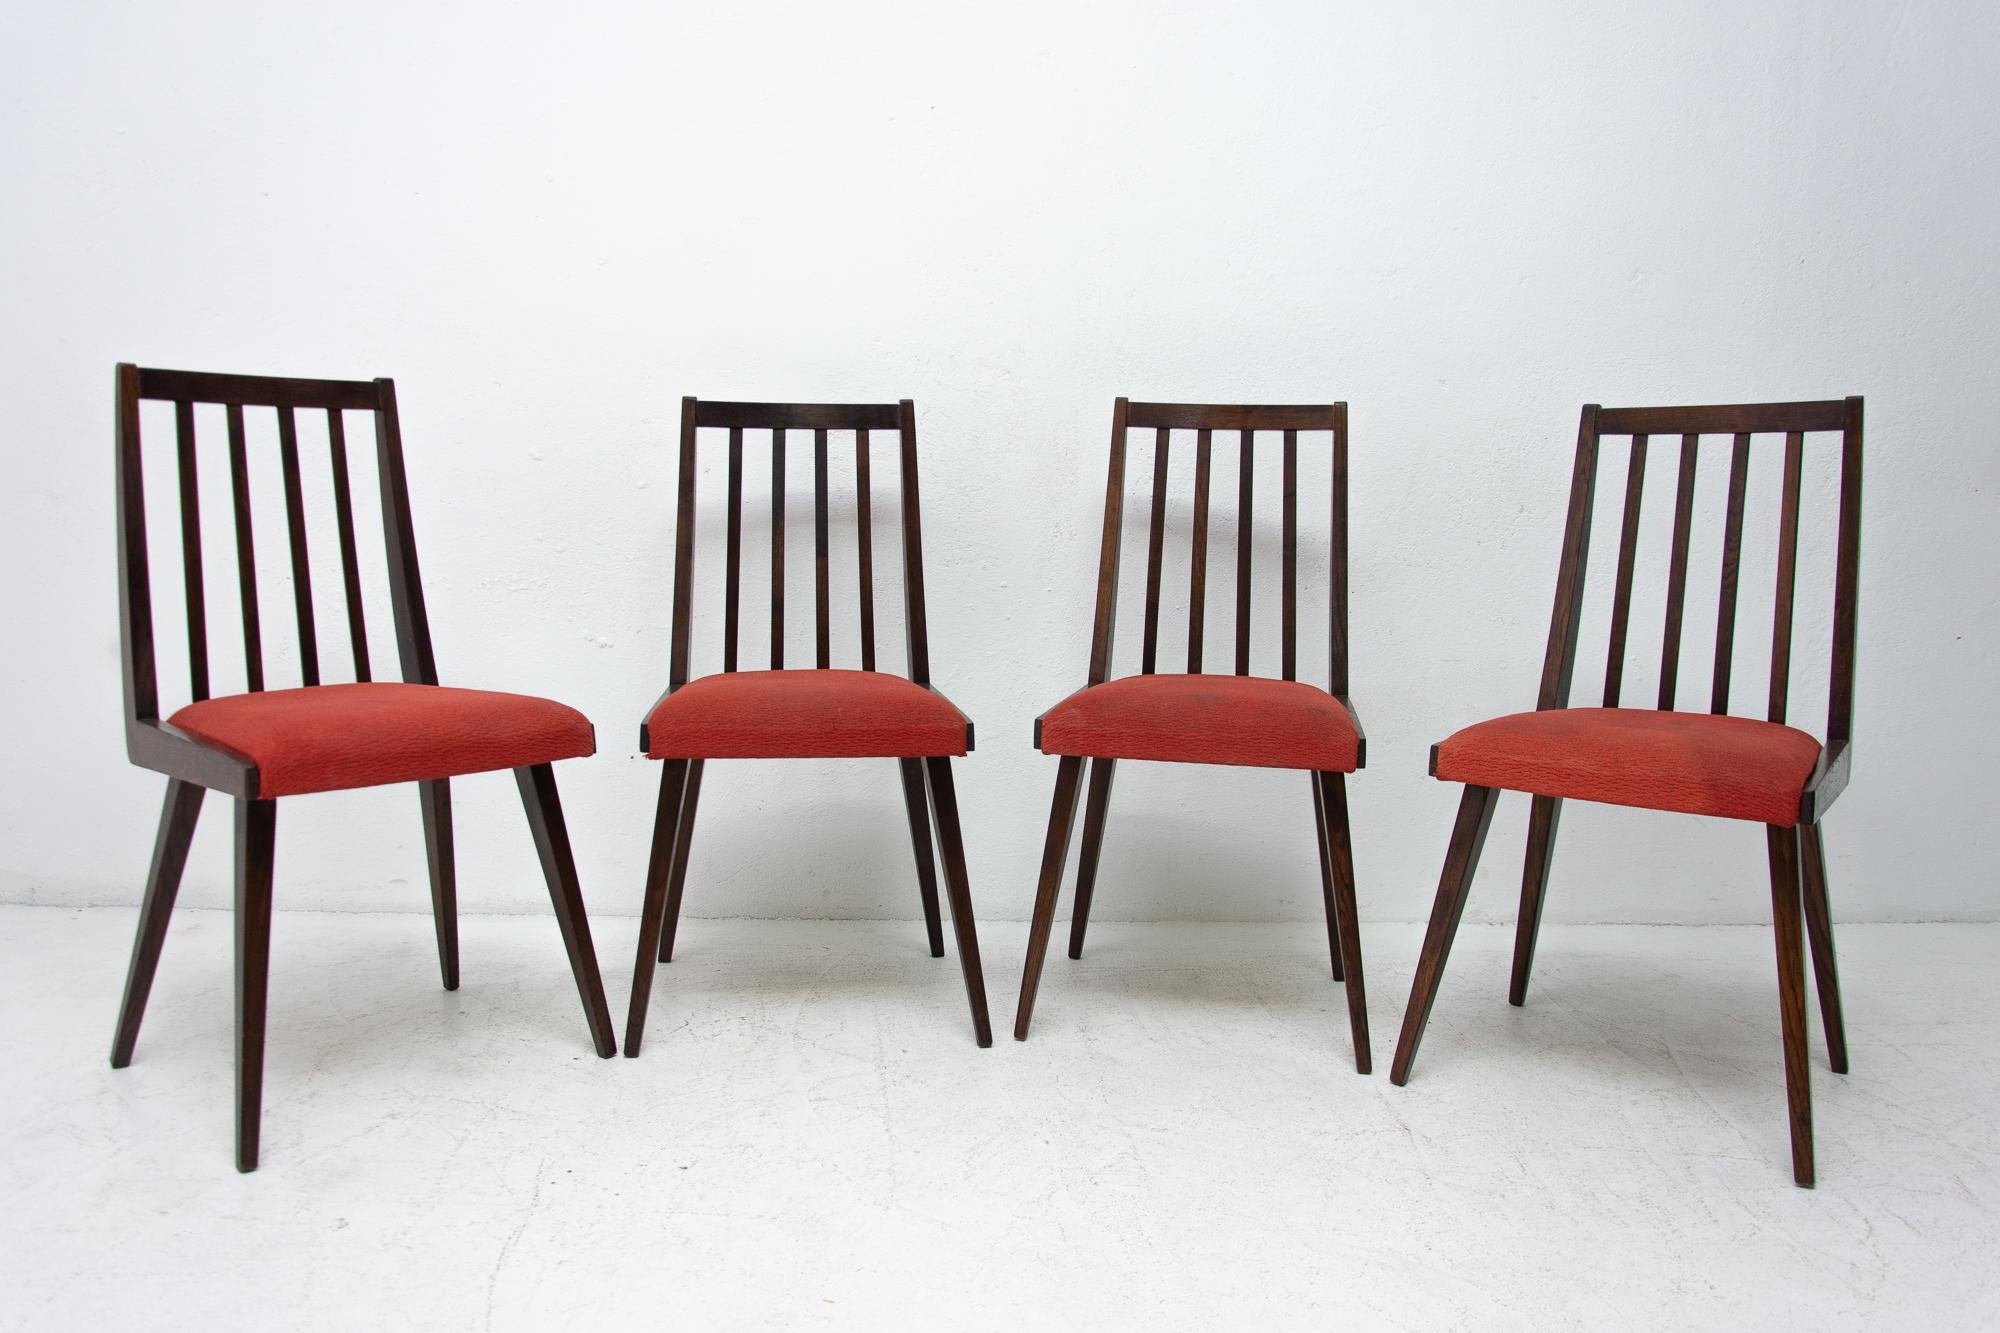 Scandinavian Modern Midcentury Dining Chairs by Jiří Jiroutek for Interiér Praha, 1960s For Sale